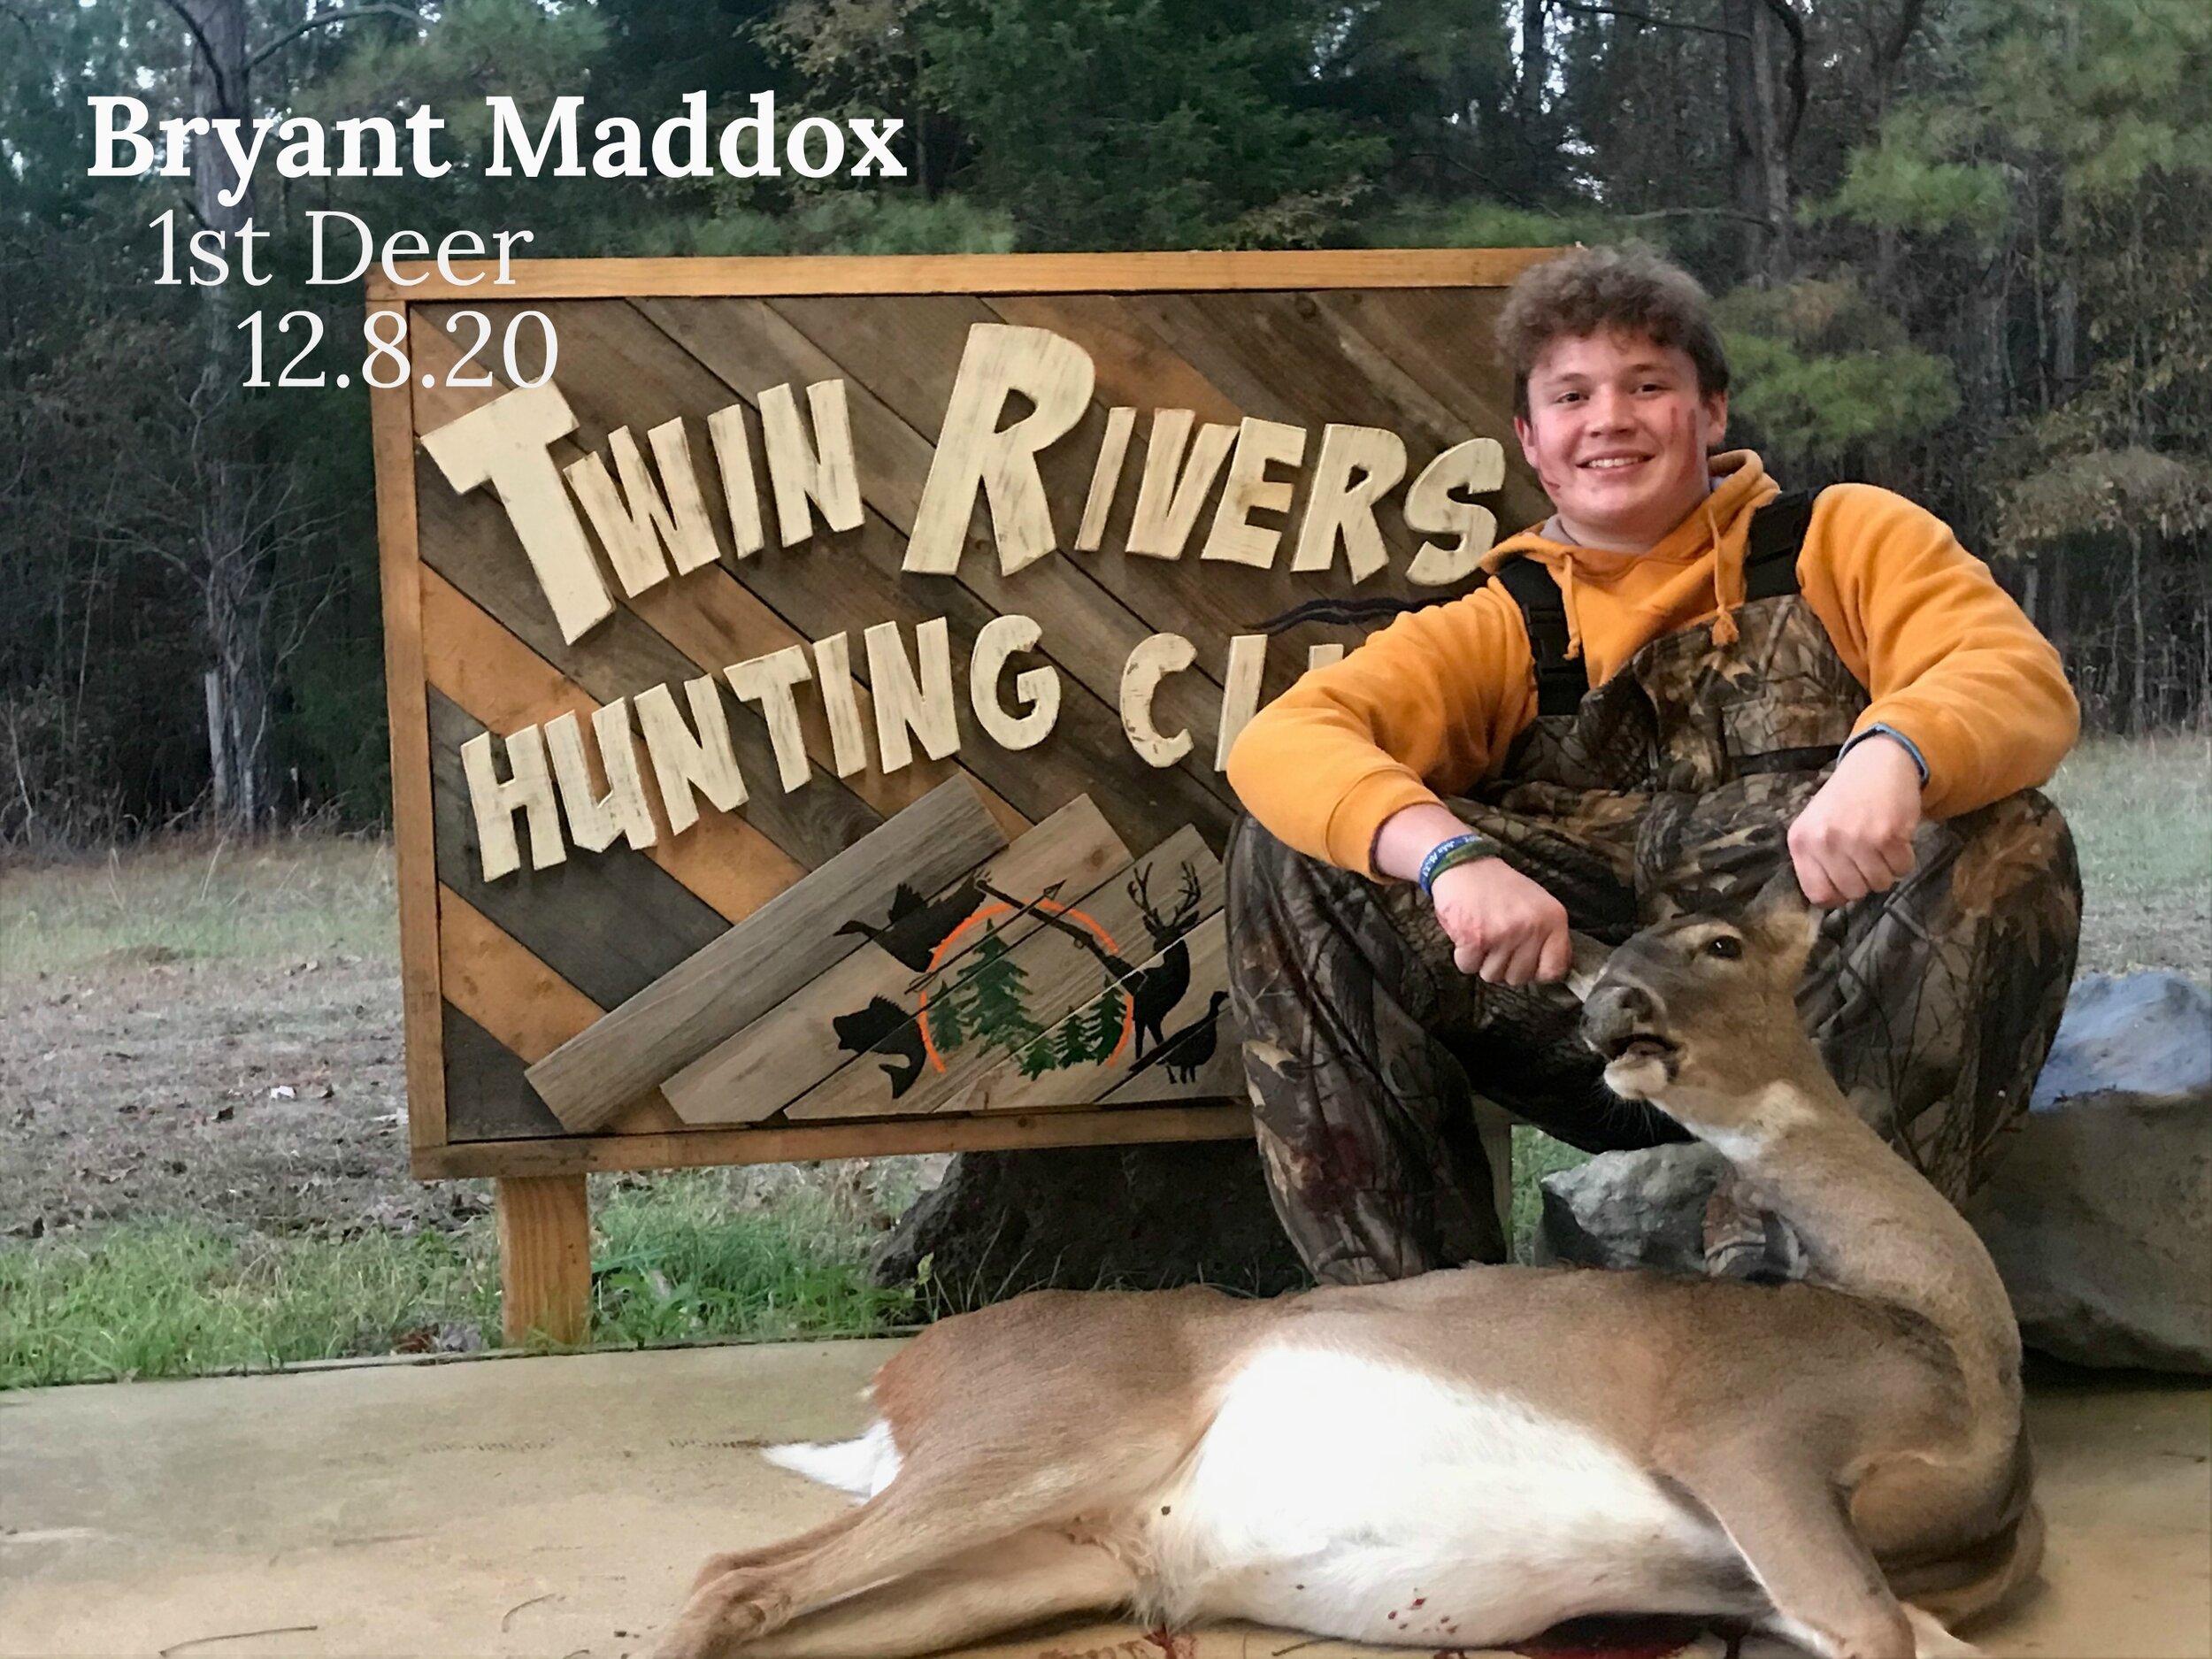 Bryant Maddox 1st deer_print.jpg